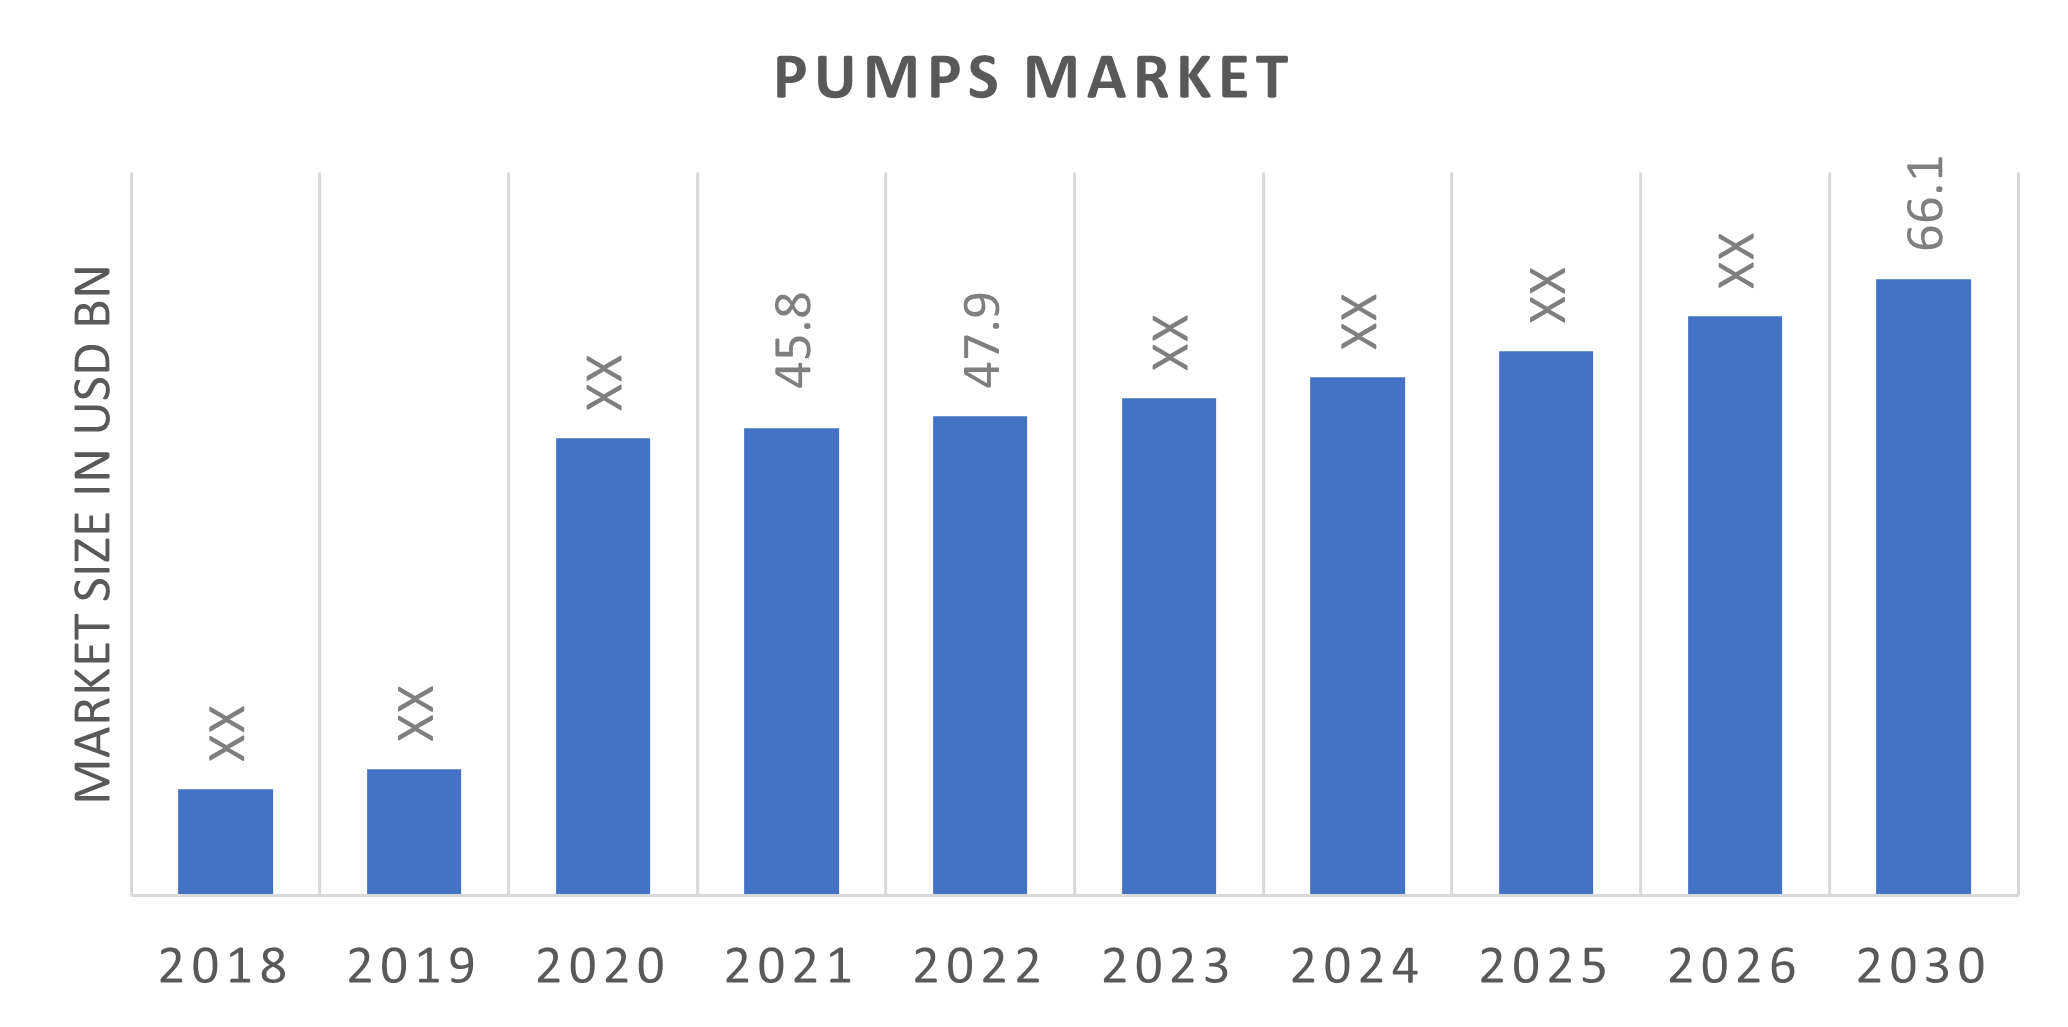 Global Pumps Market Overview